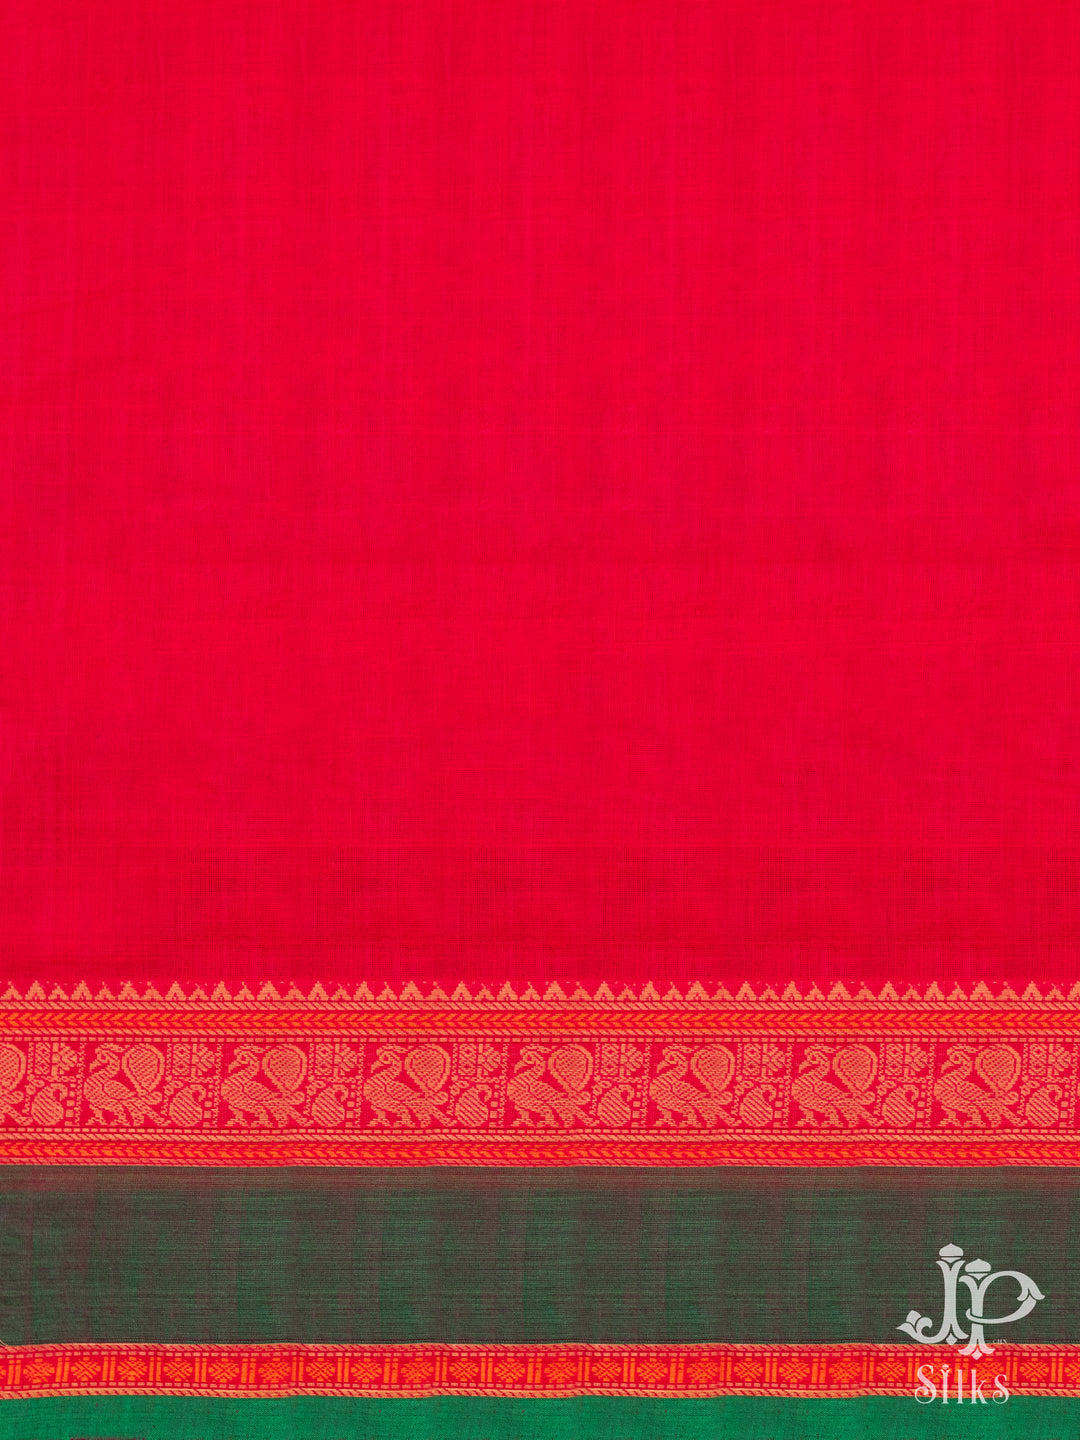 Reddish Pink and Green Kanchi Cotton Saree - D9728 - VIew 2